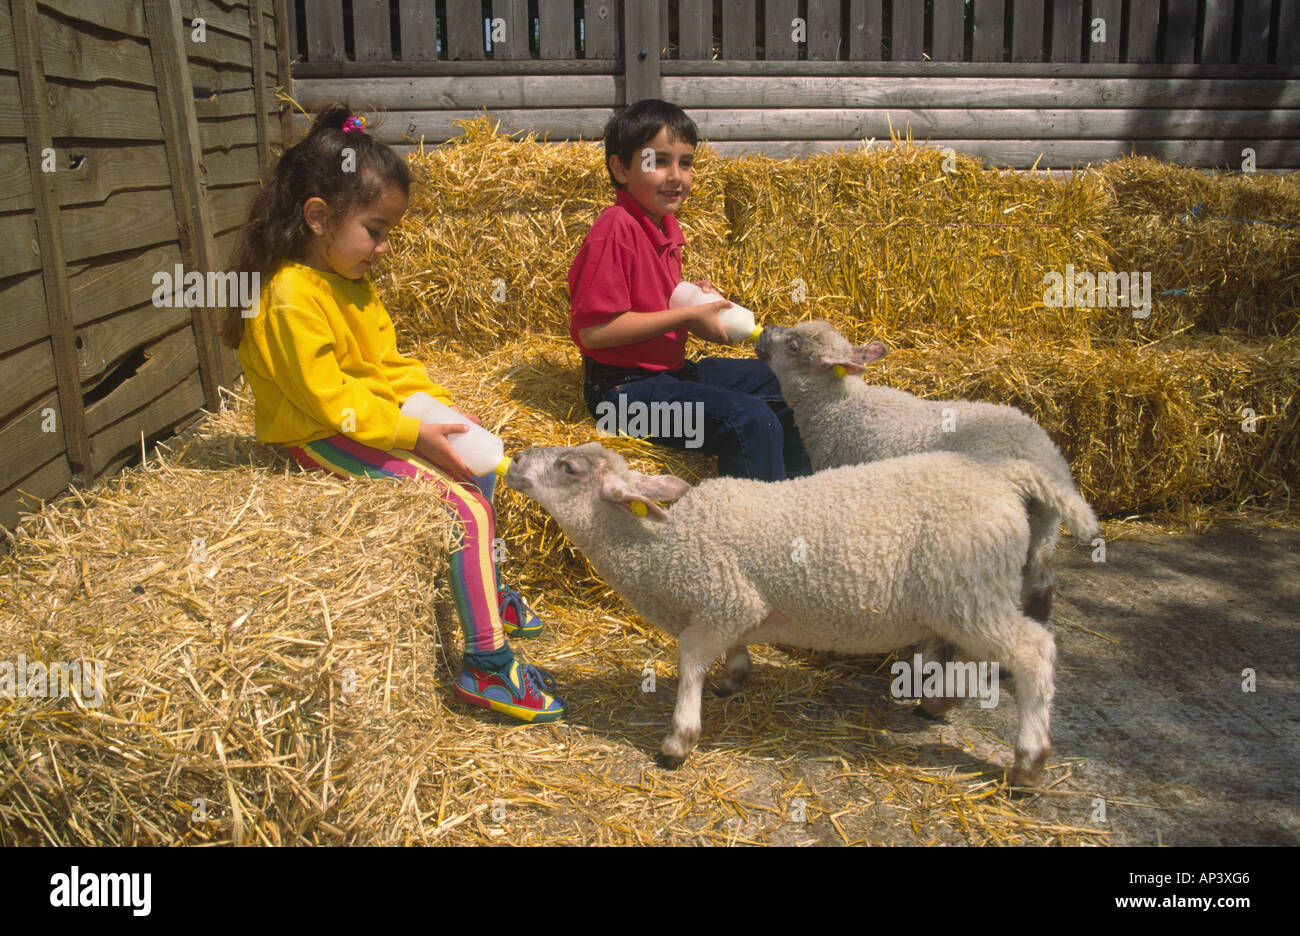 Young Boy and Girl Bottle Feeding Lambs on Farm Stock Photo